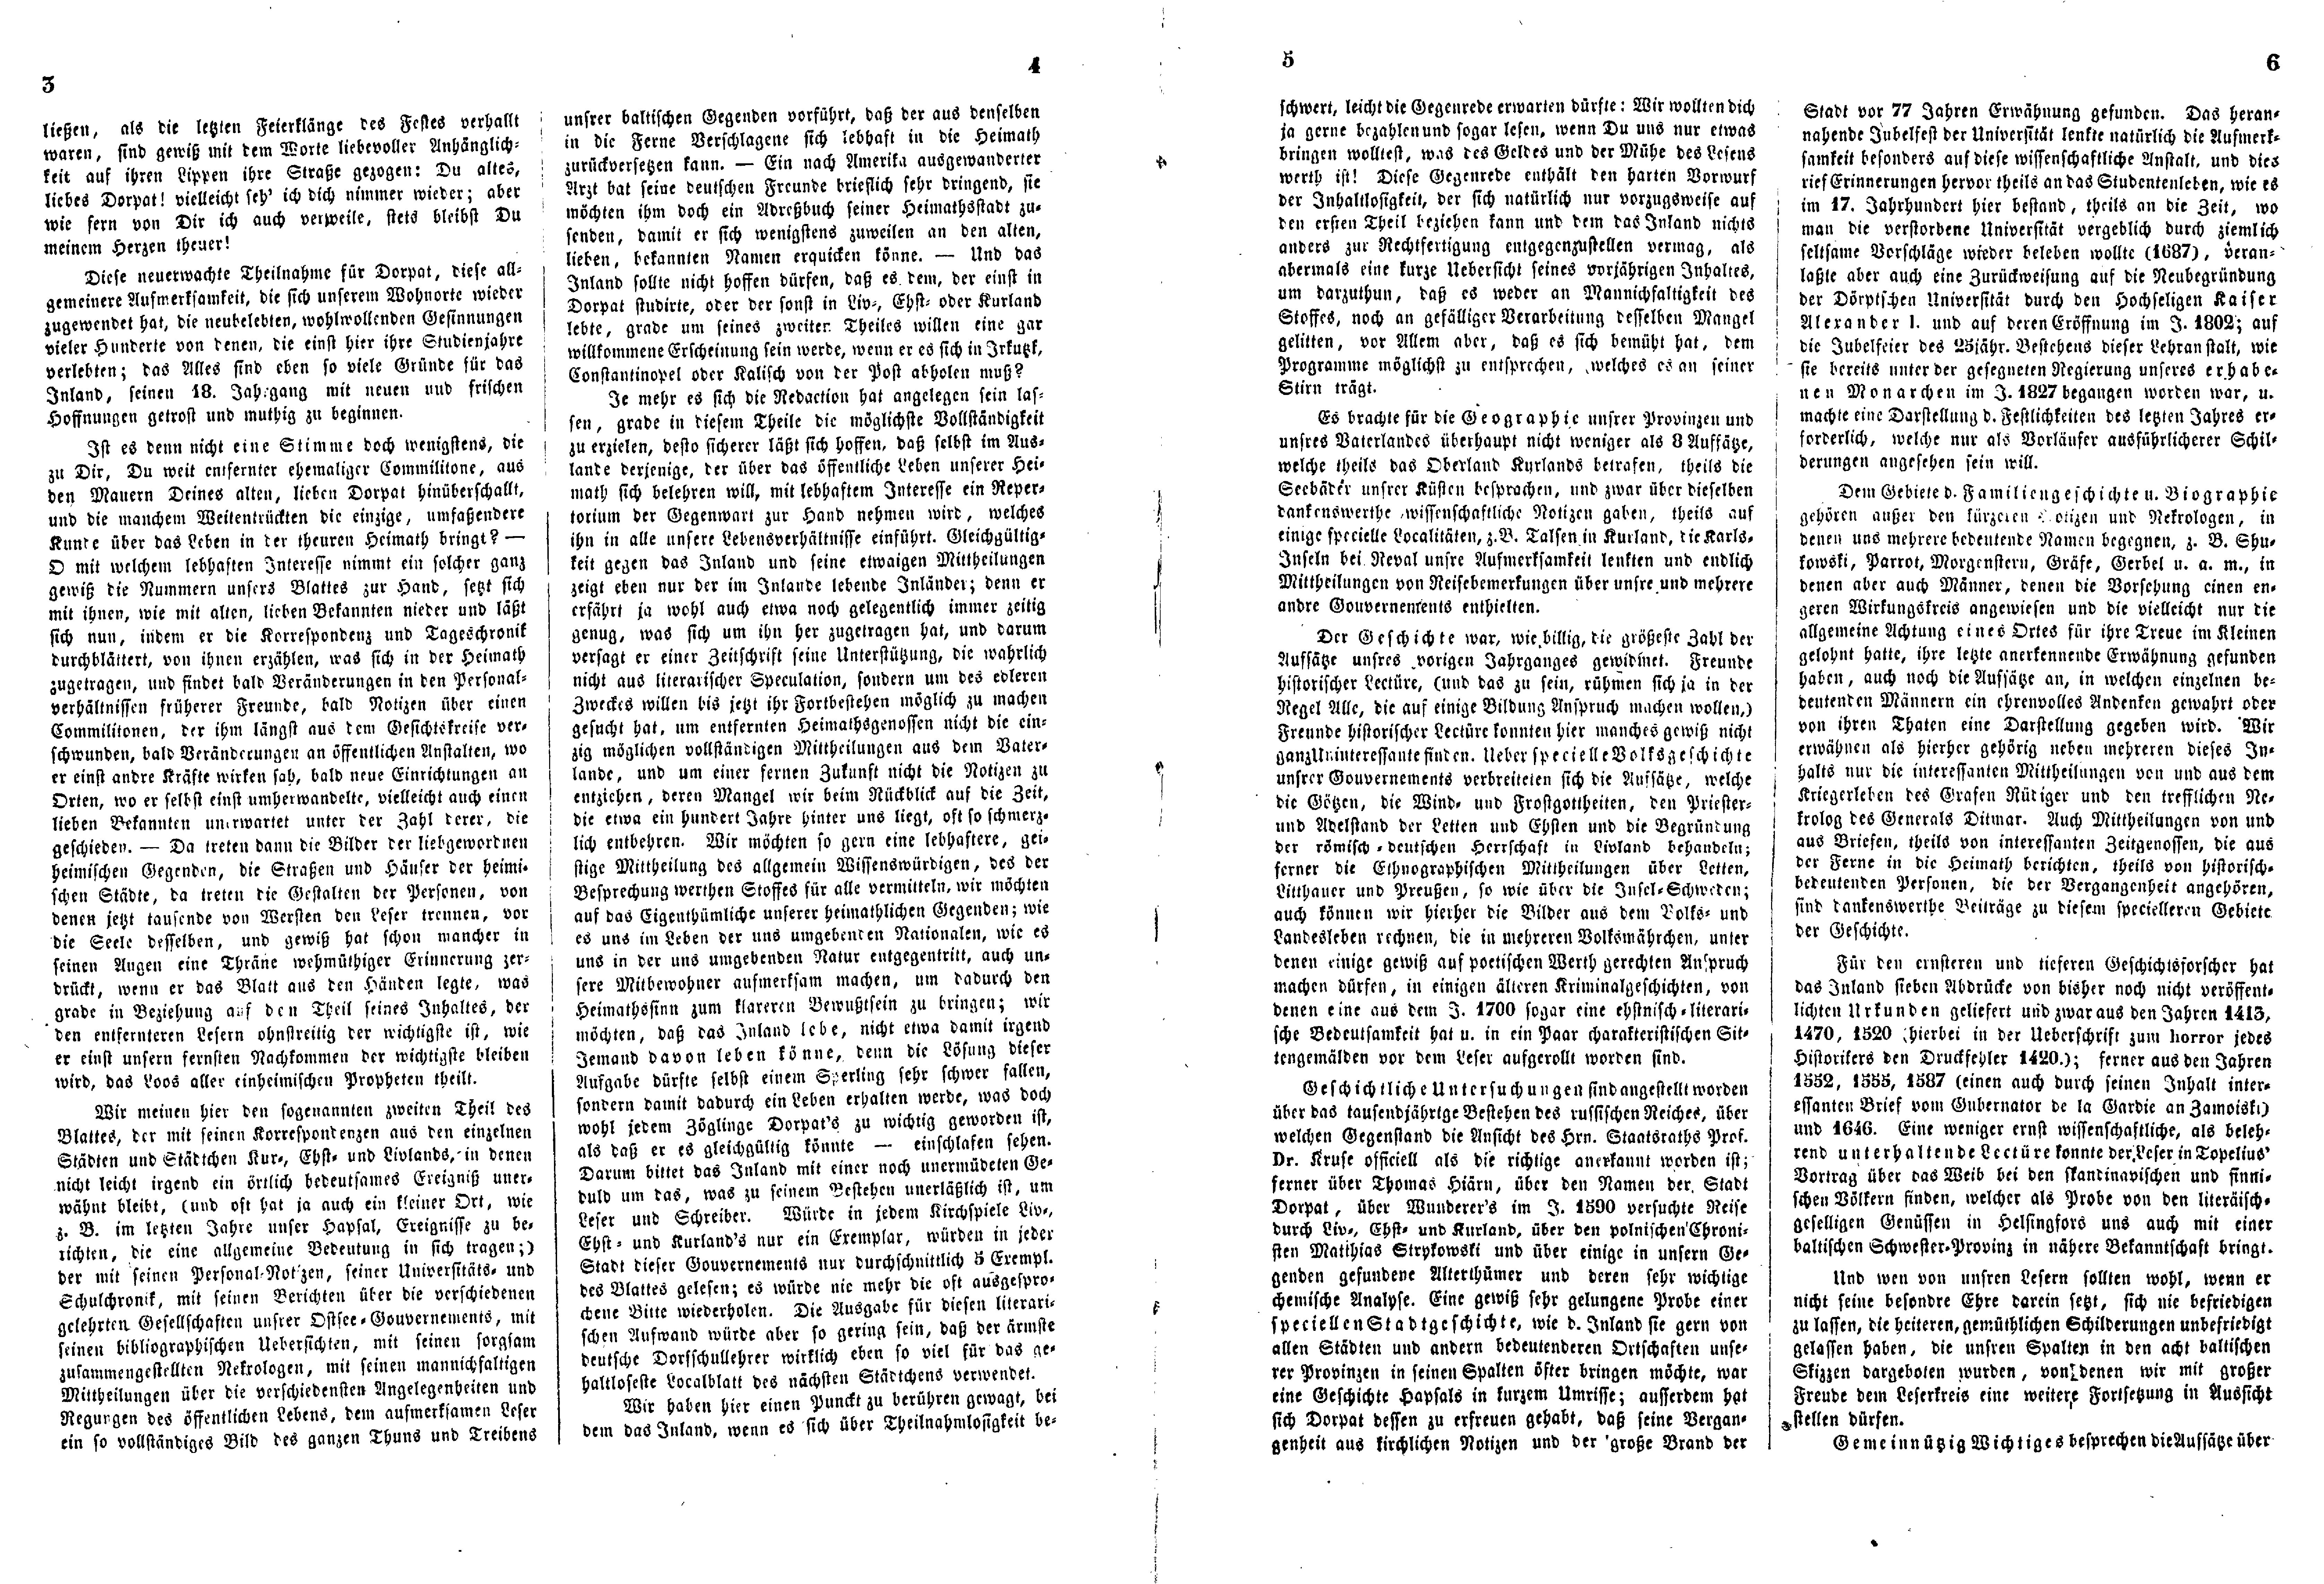 Das Inland [18] (1853) | 11. (3-6) Main body of text